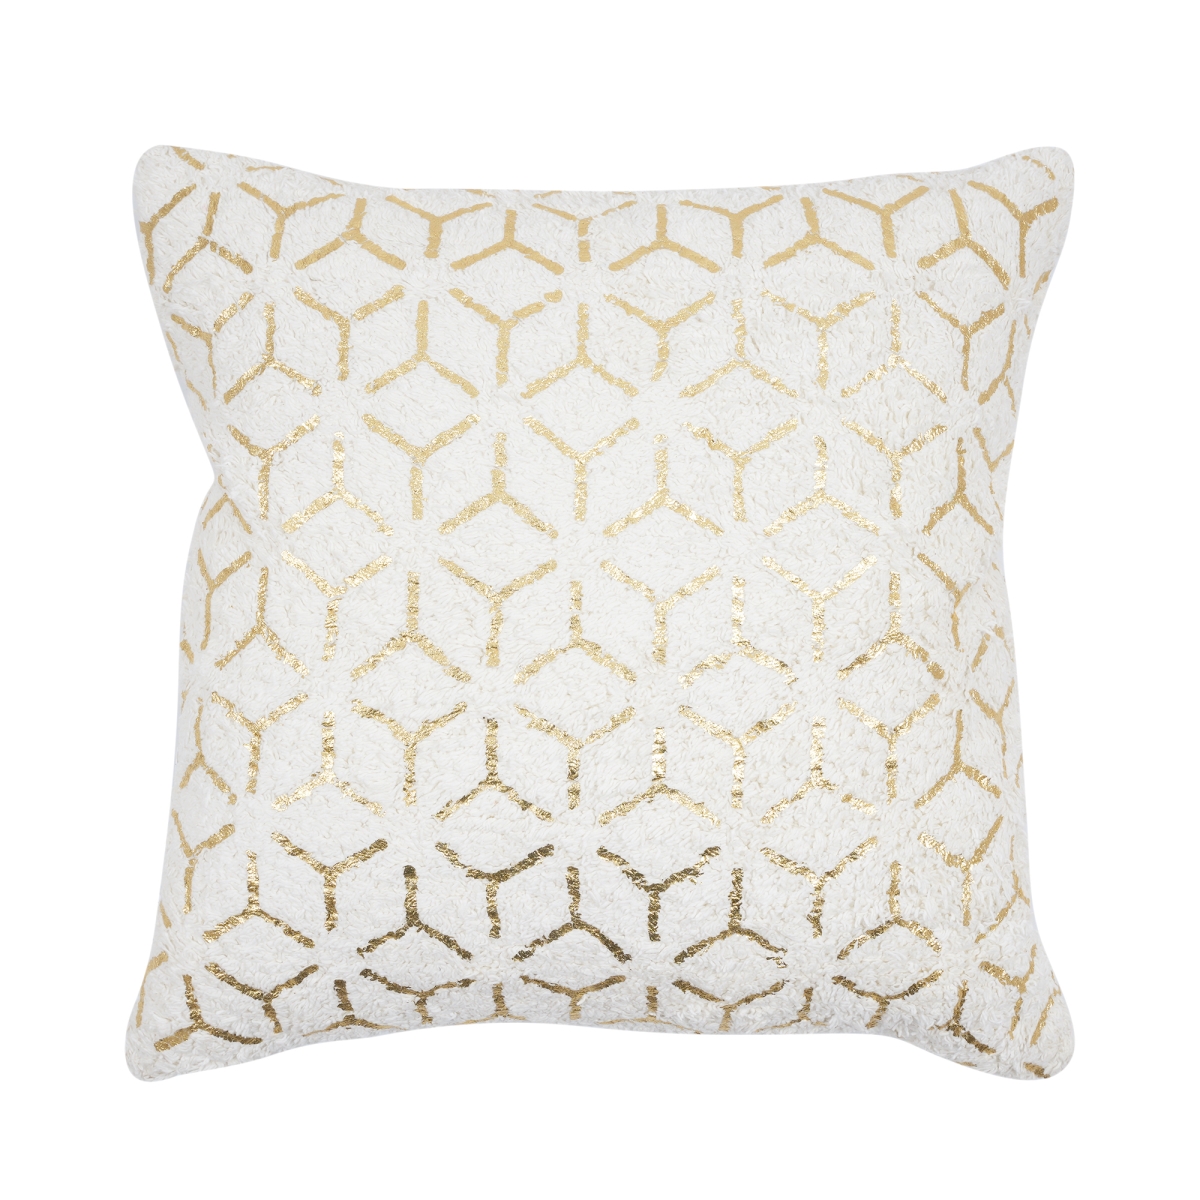 Picture of Pasargad Home PCH-1631 Pasargad Home Grandcanyon Geometric Gold Foil Cotton Pillow, White